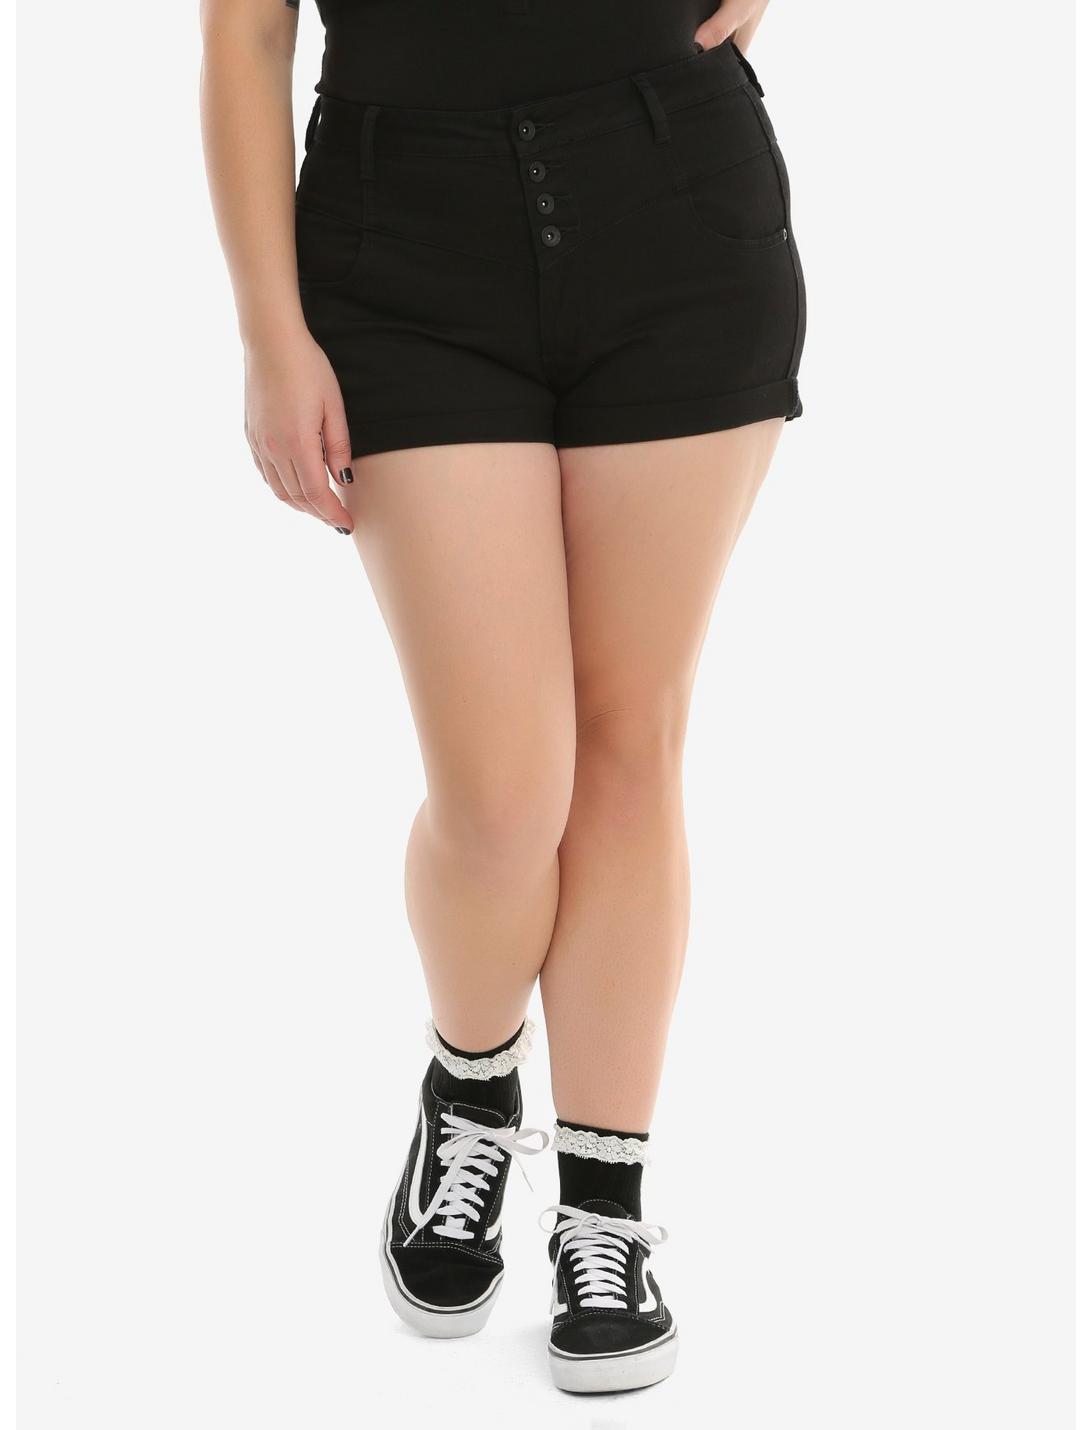 Blackheart Black High-Waisted V-Stitch Shorts Plus Size, BLACK, hi-res